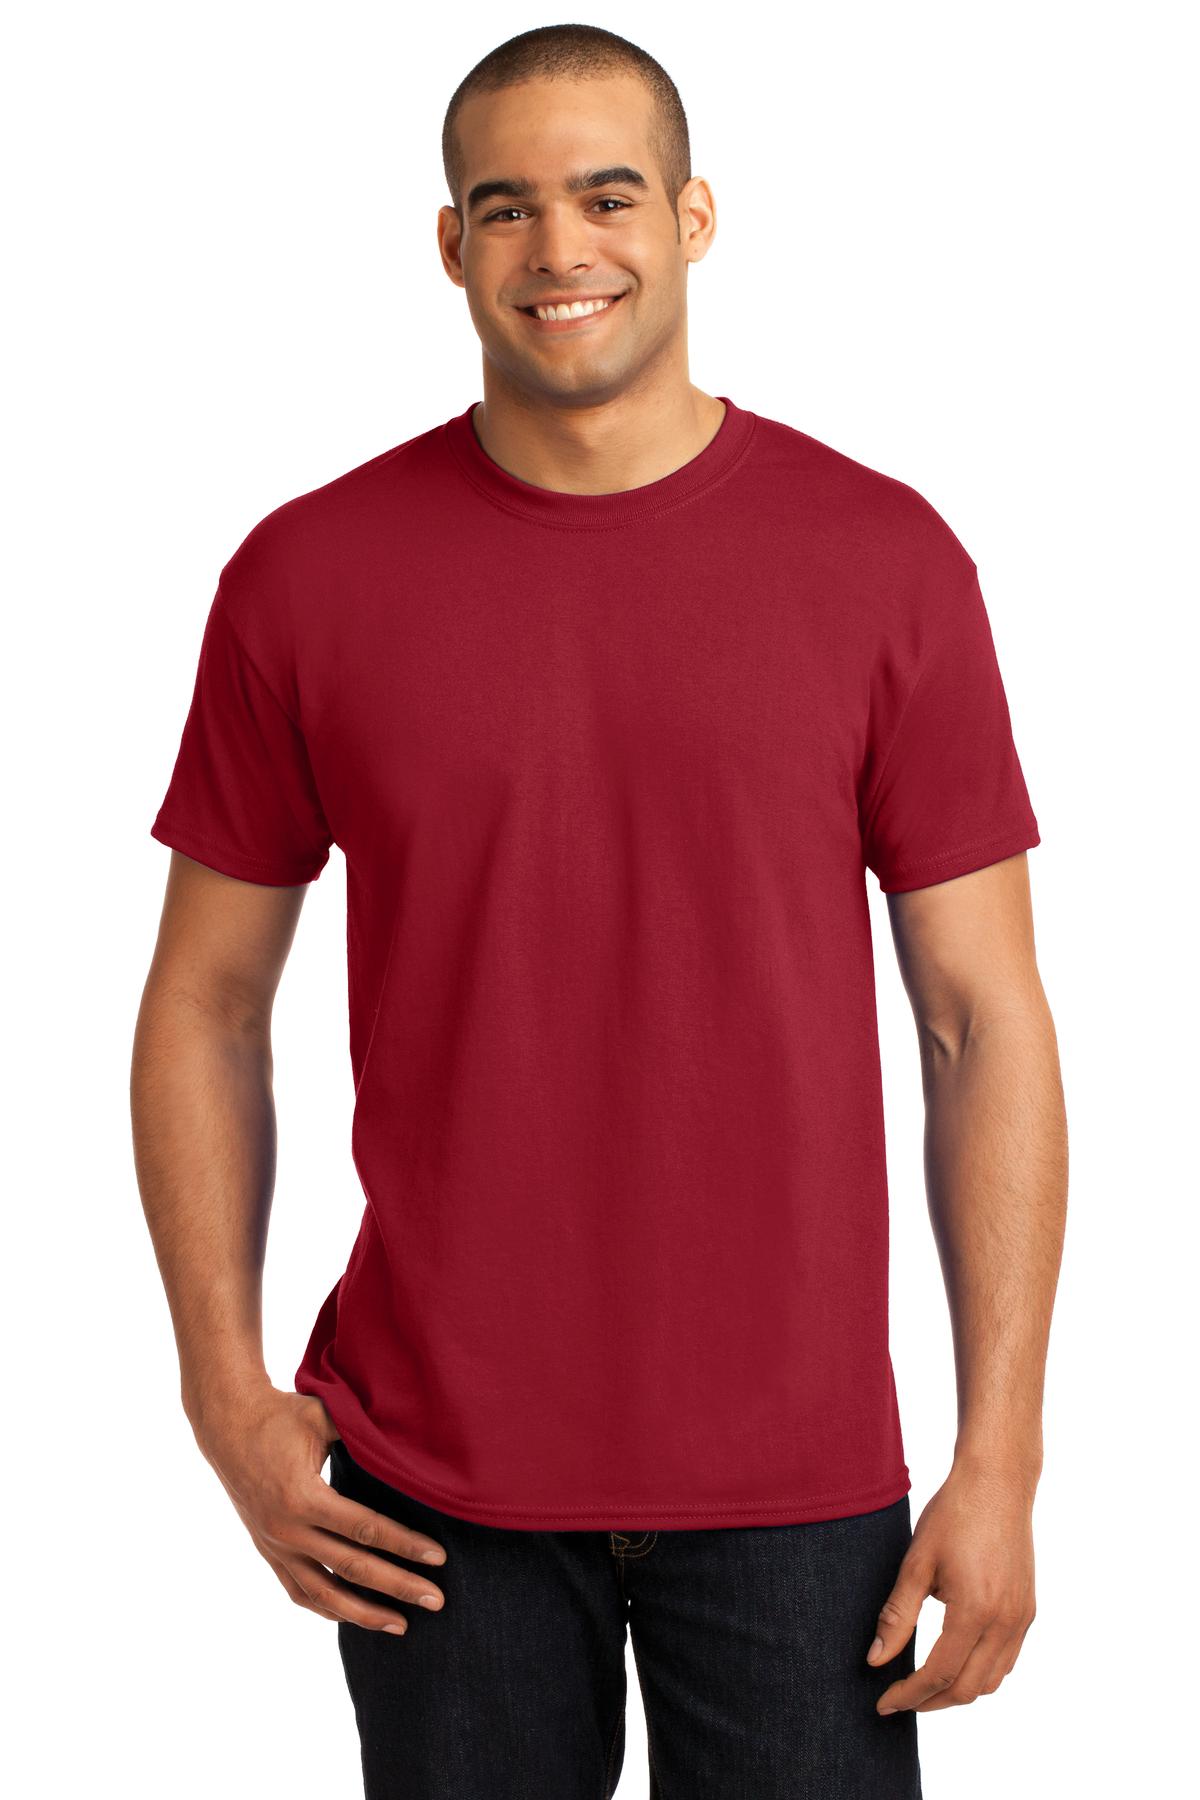 Hanes® - EcoSmart® 50/50 Cotton/Poly T-Shirt. 5170 [Deep Red] - DFW Impression